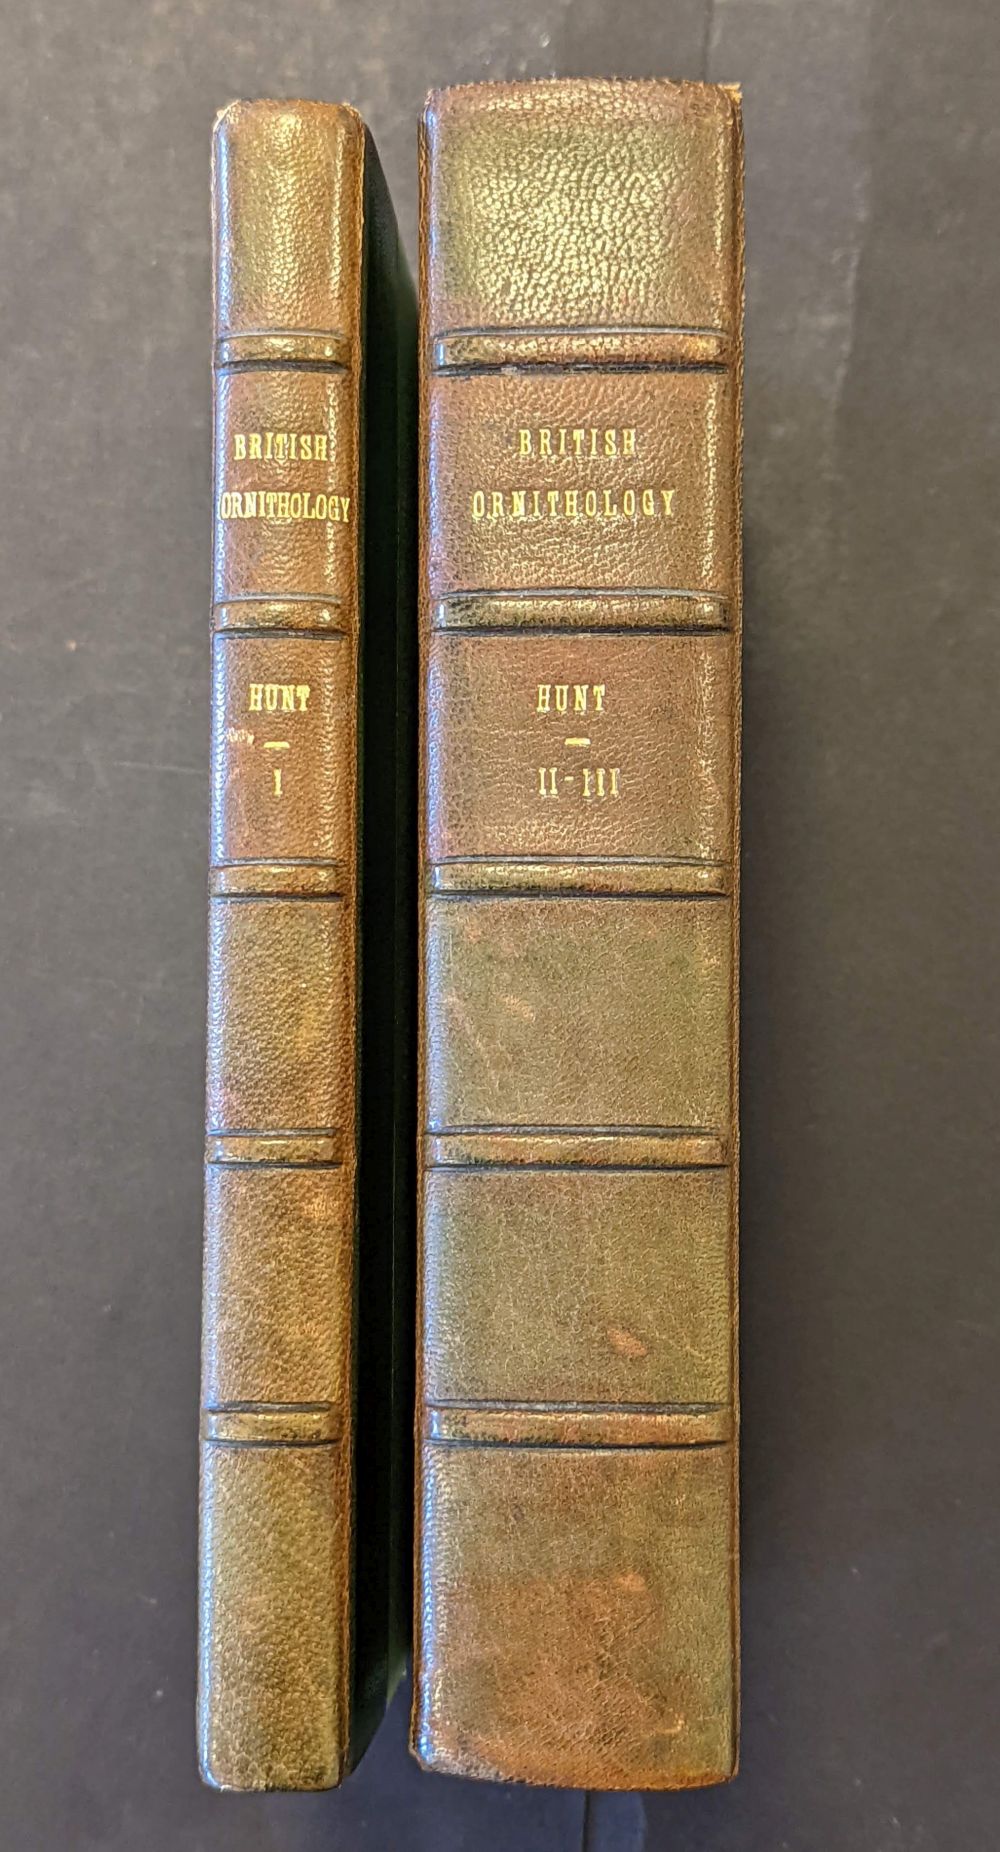 Hunt (John). British Ornithology, 3 volumes in 2, Norwich: Bacon & Co, 1815 - Image 3 of 11